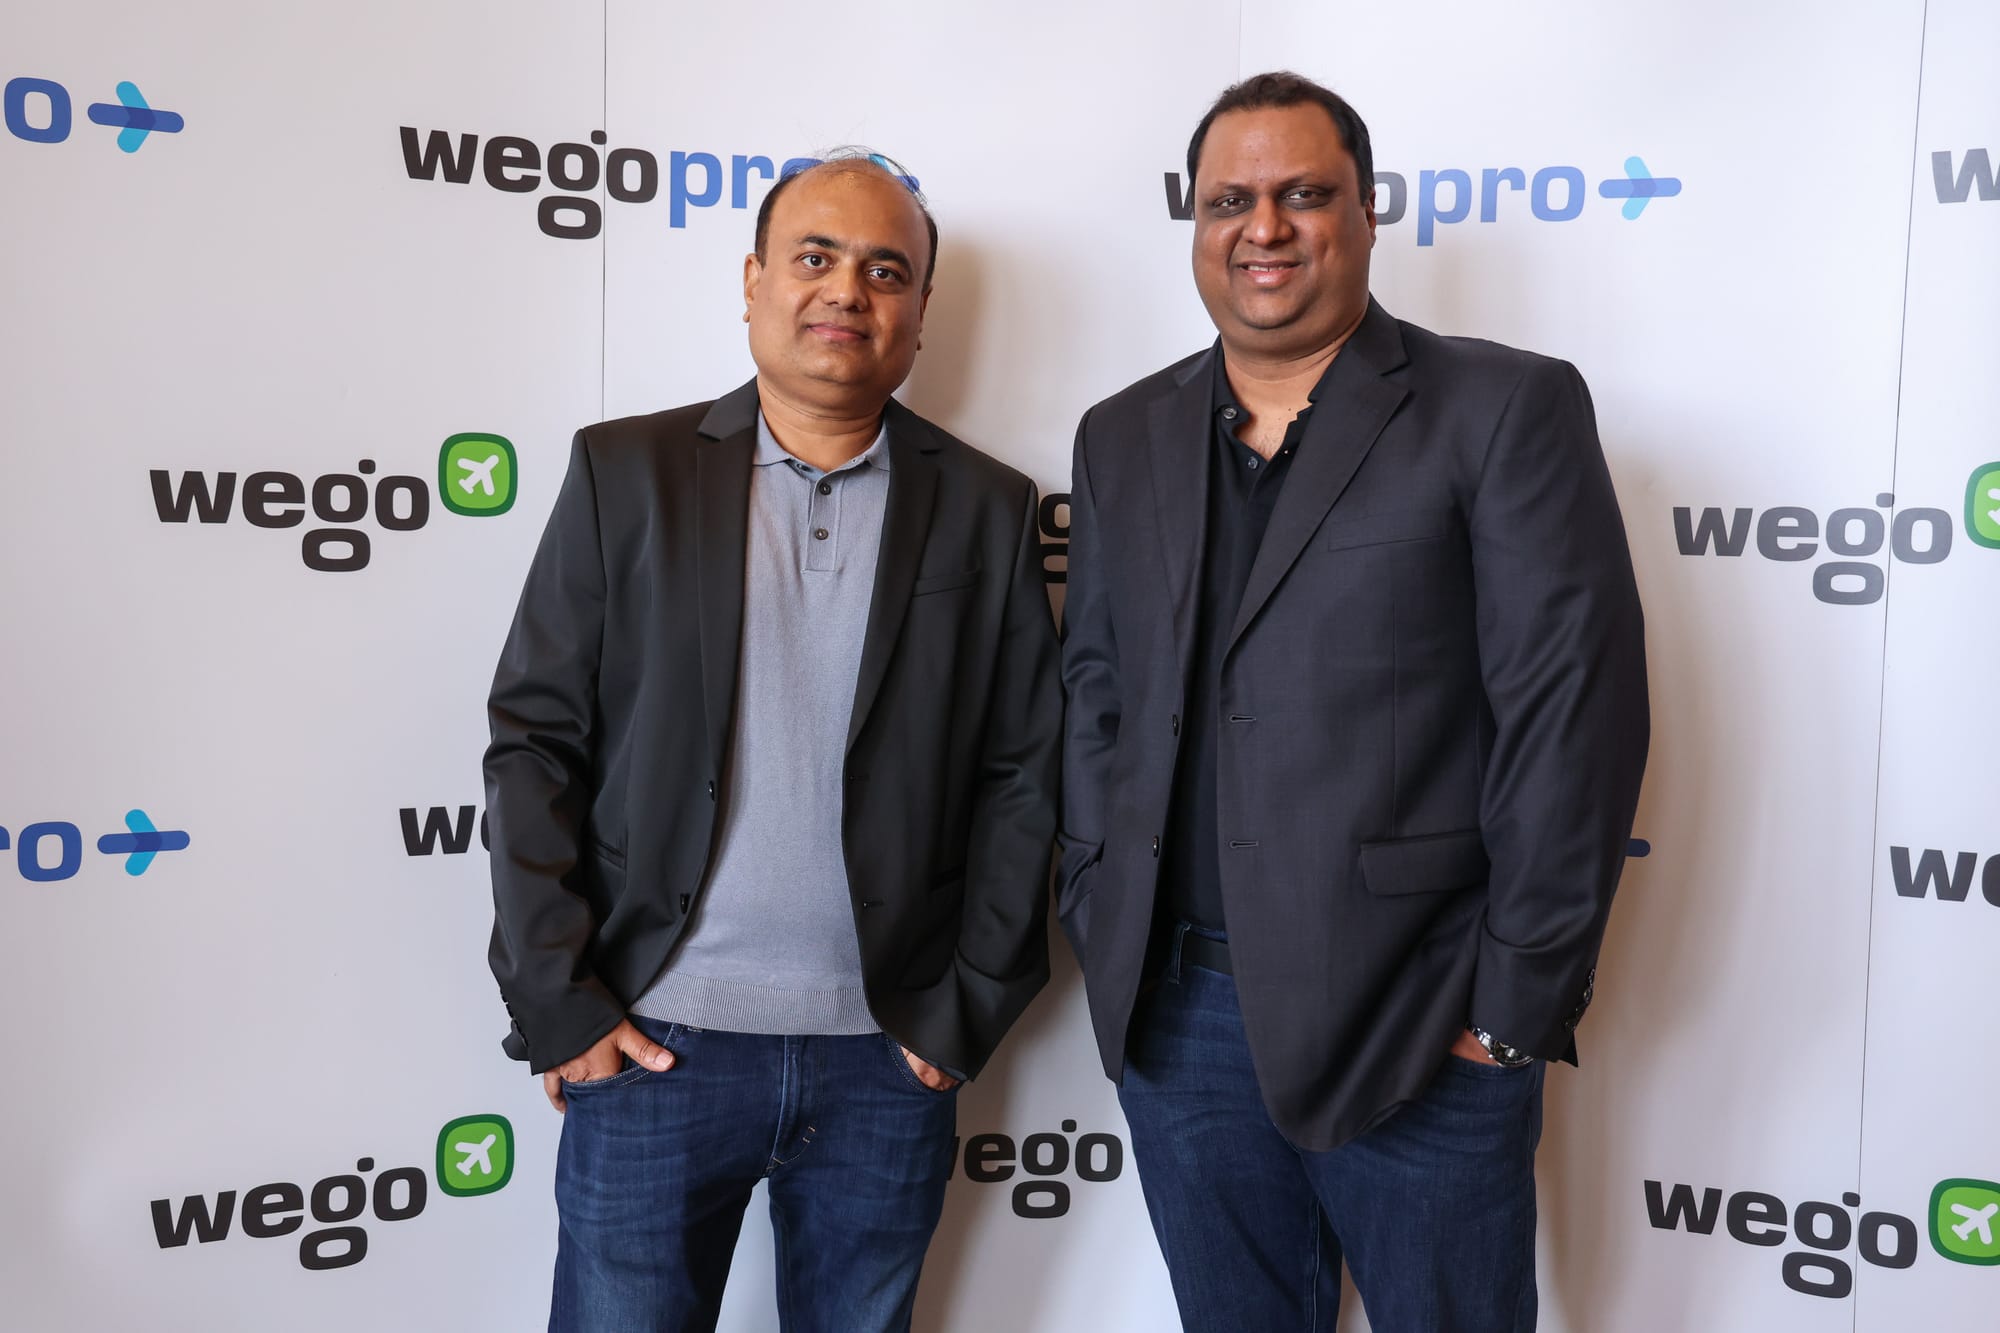 WegoPro Launch Event-Co-Founders - WegoPro